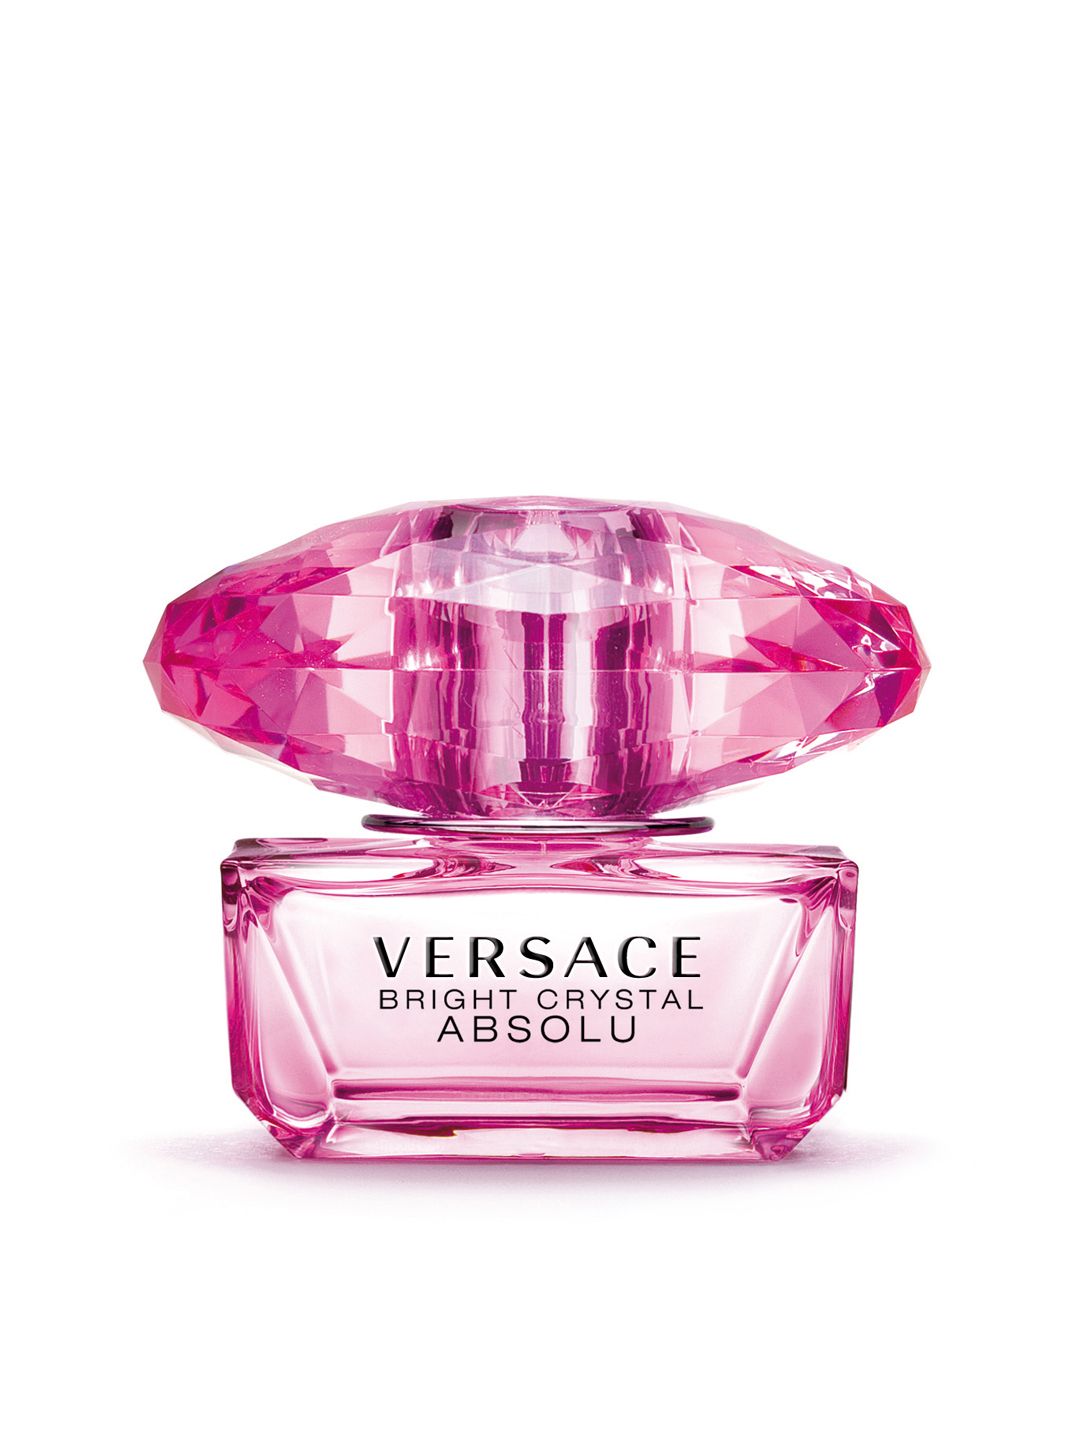 Versace Women Bright Crystal Absolu Eau de Parfum 50ml Price in India